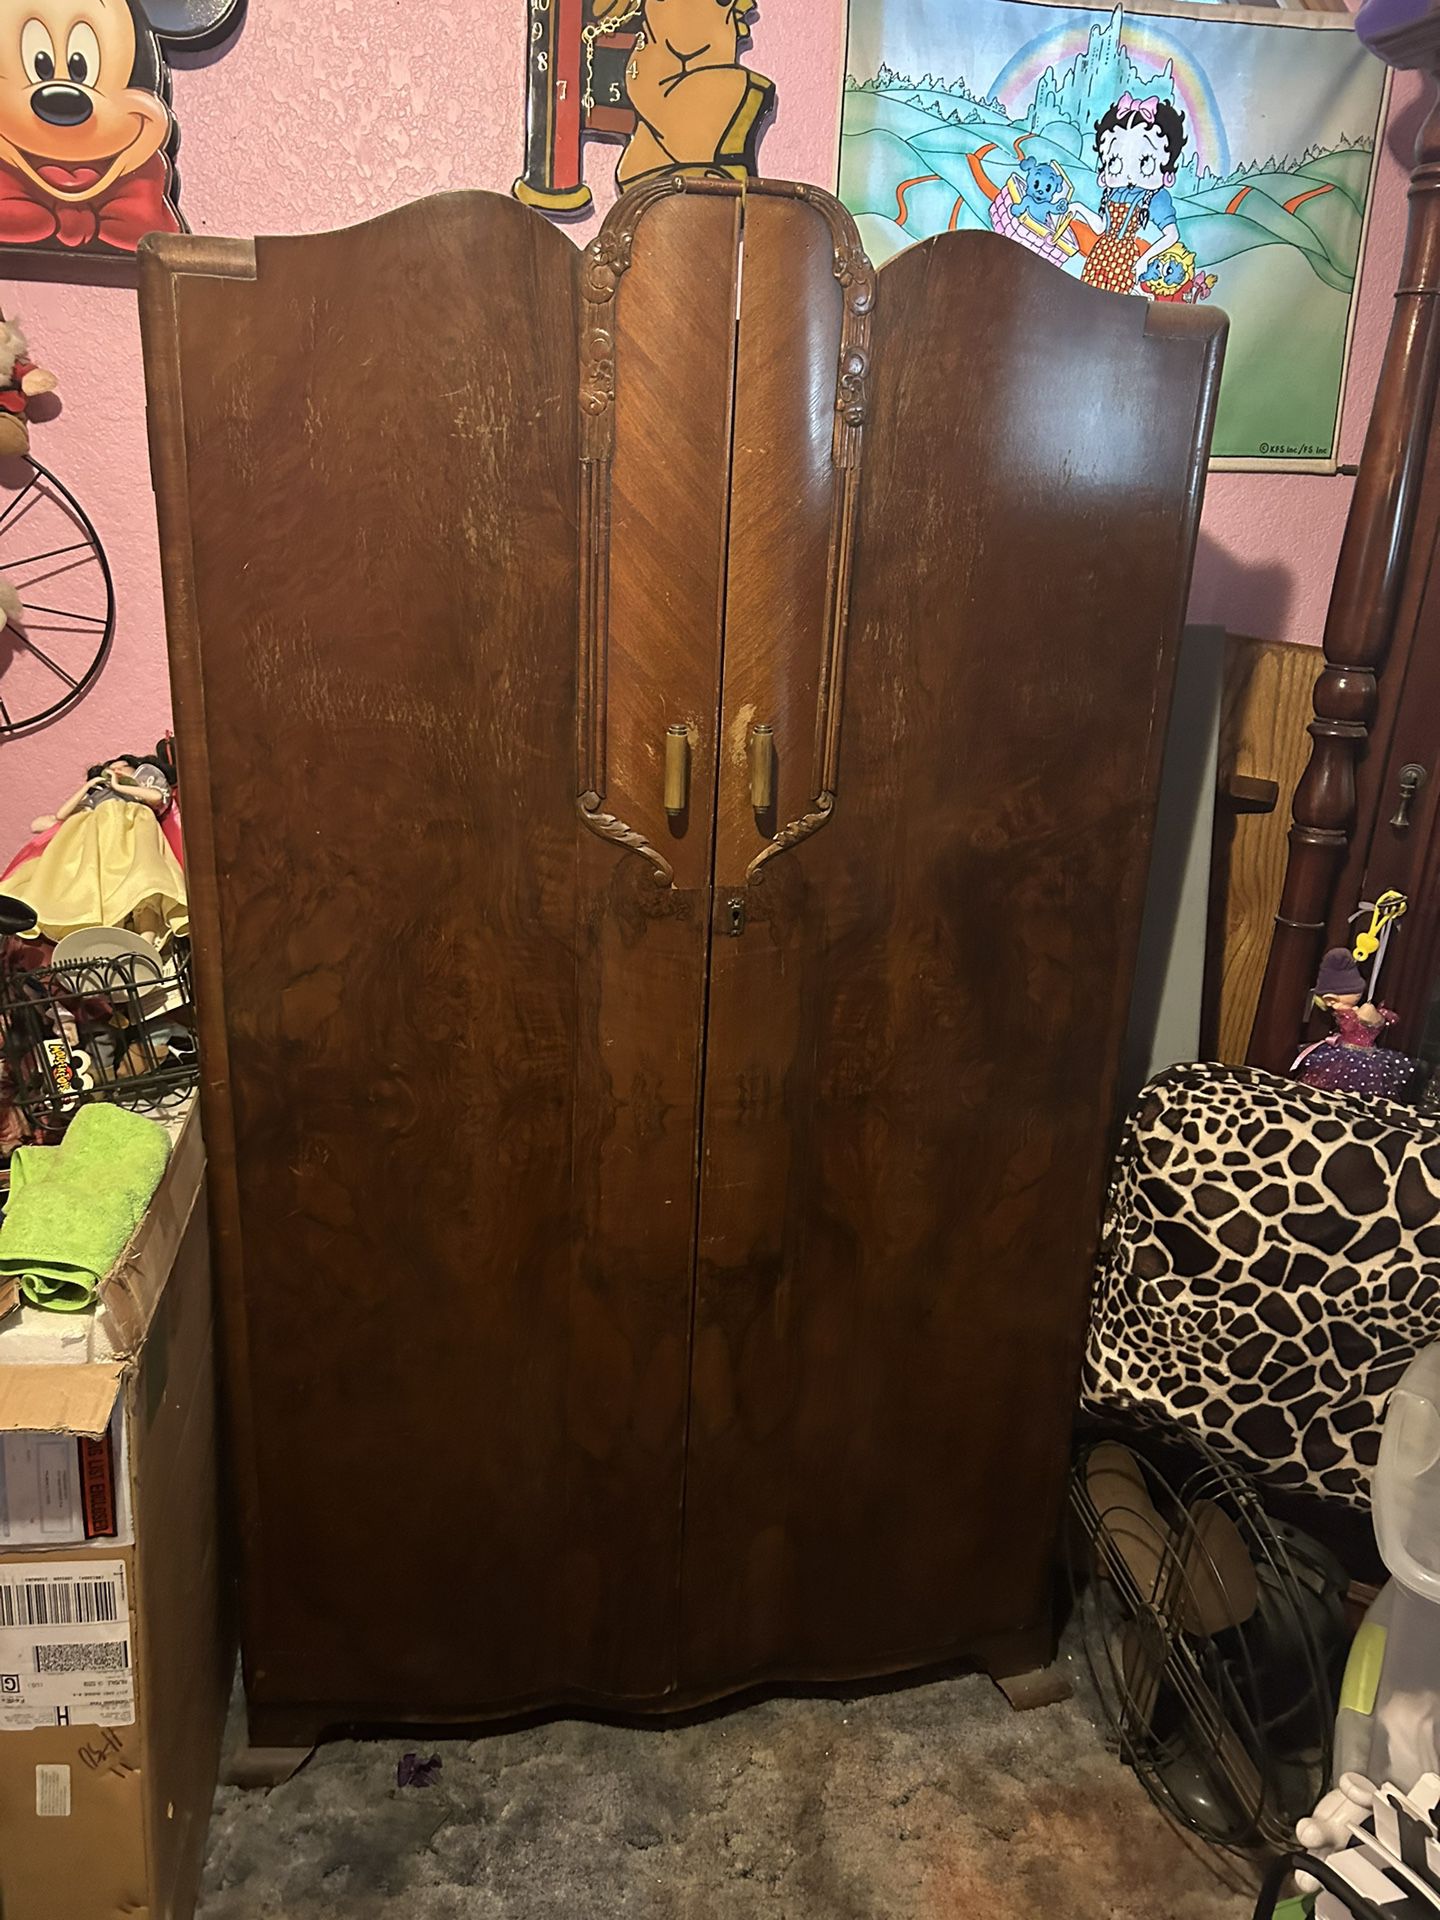 OLD Wardrobe Child Sized Cabinet Hutch Closet Dresser